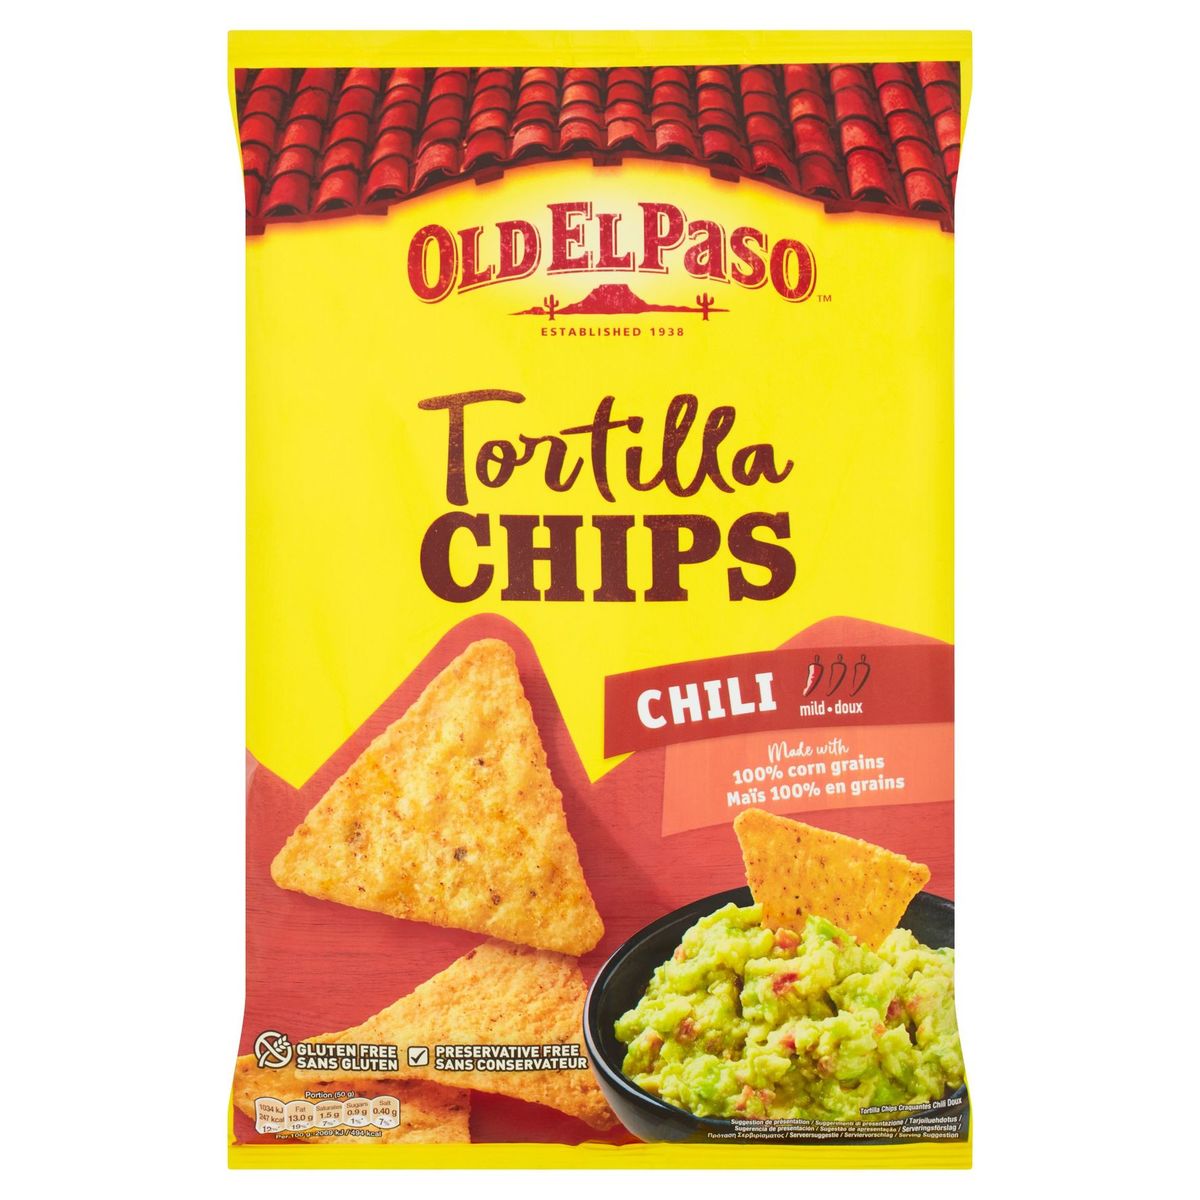 Old El Paso Tortilla Chips Chili 185 g